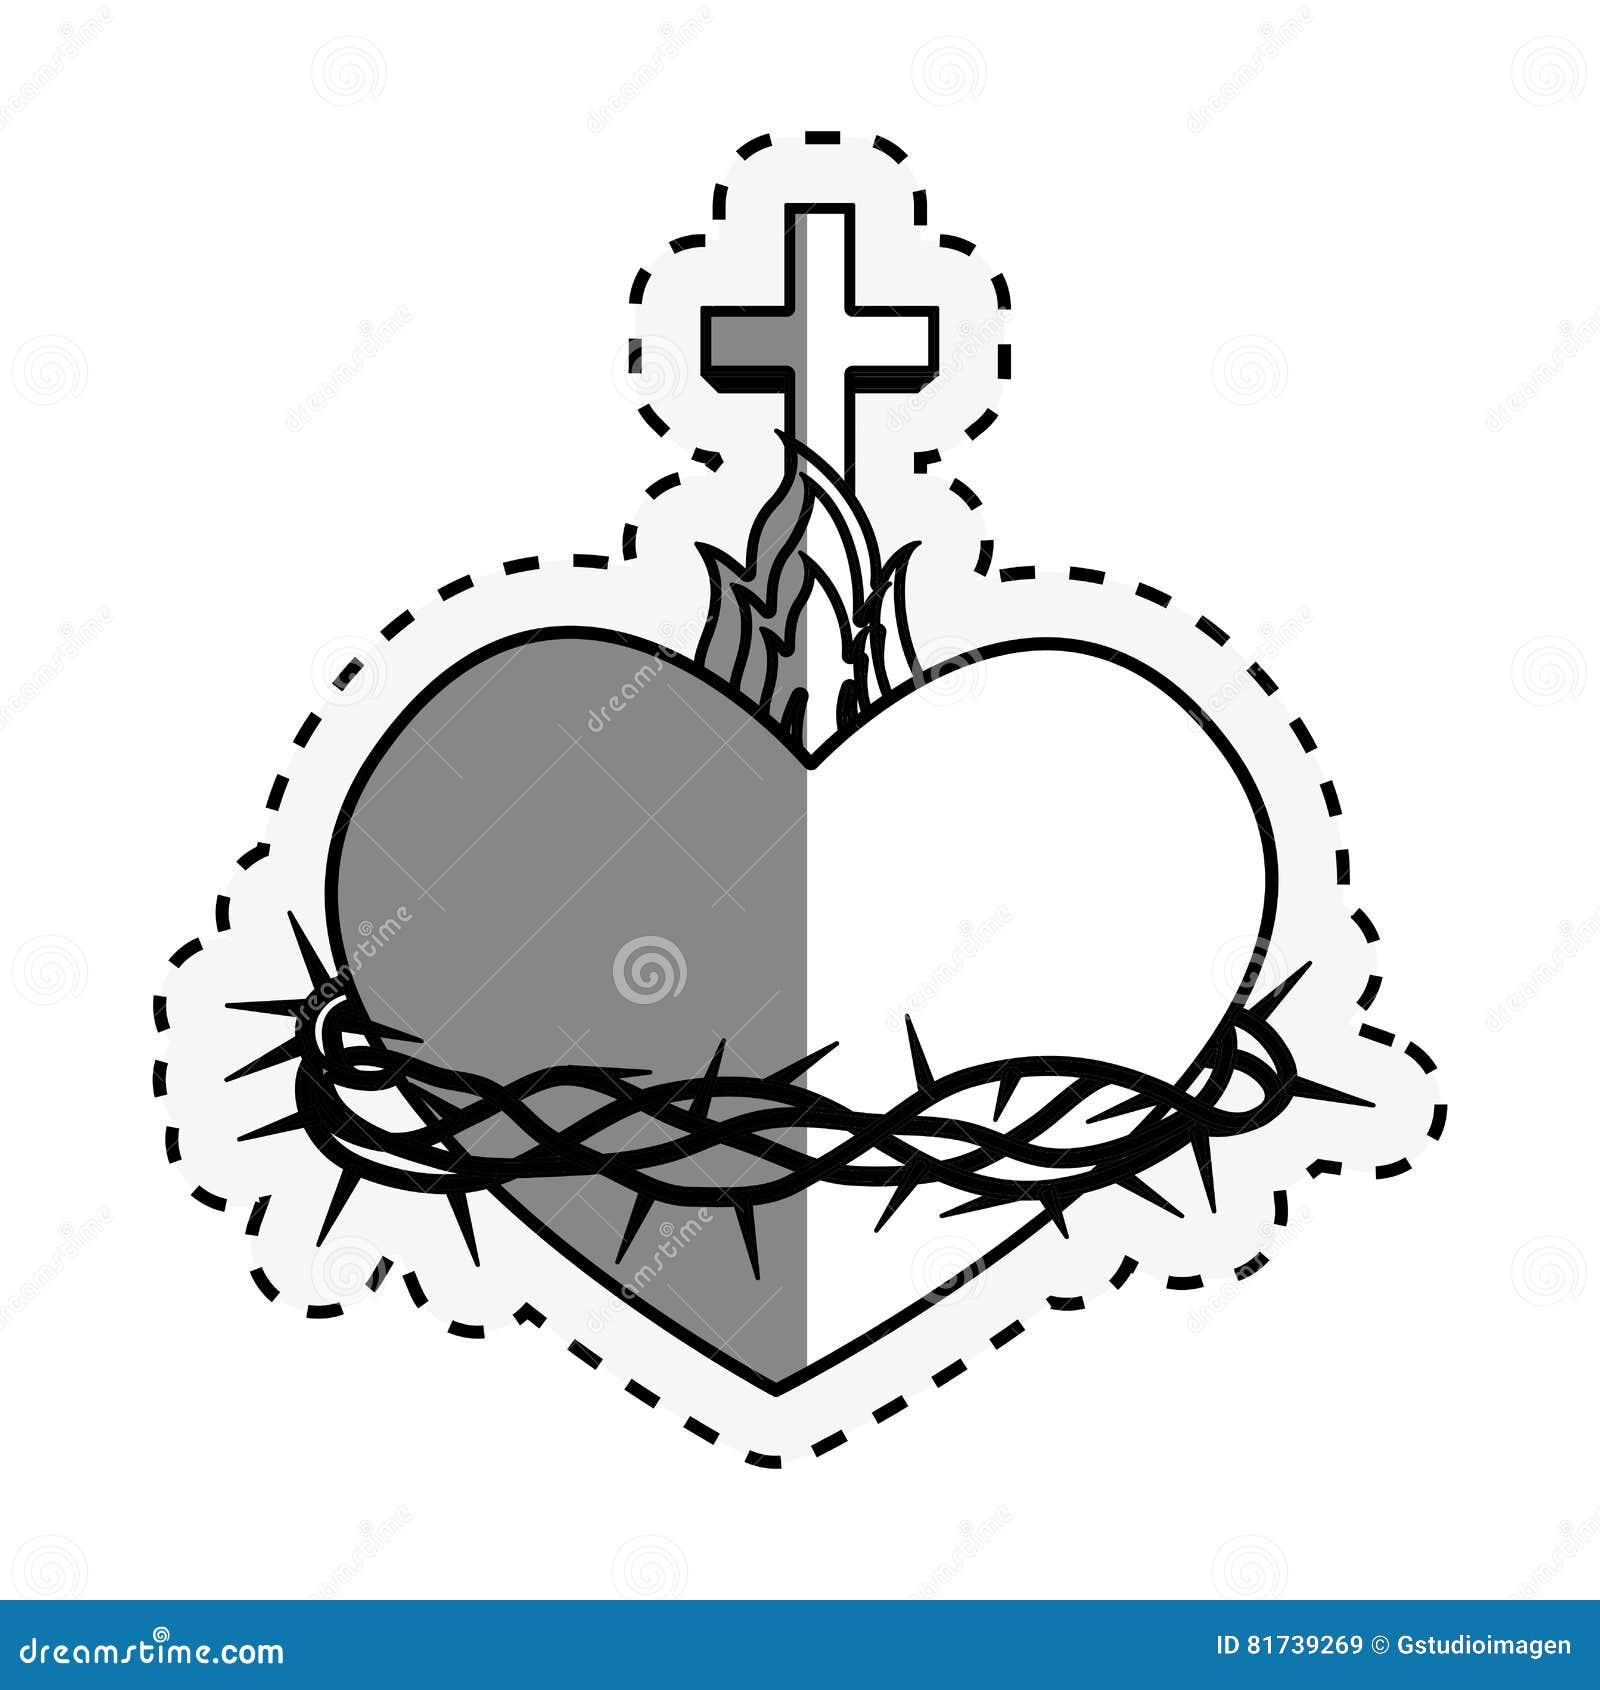 Sacred Heart of Jesus stock vector. Illustration of spiritual - 81739269